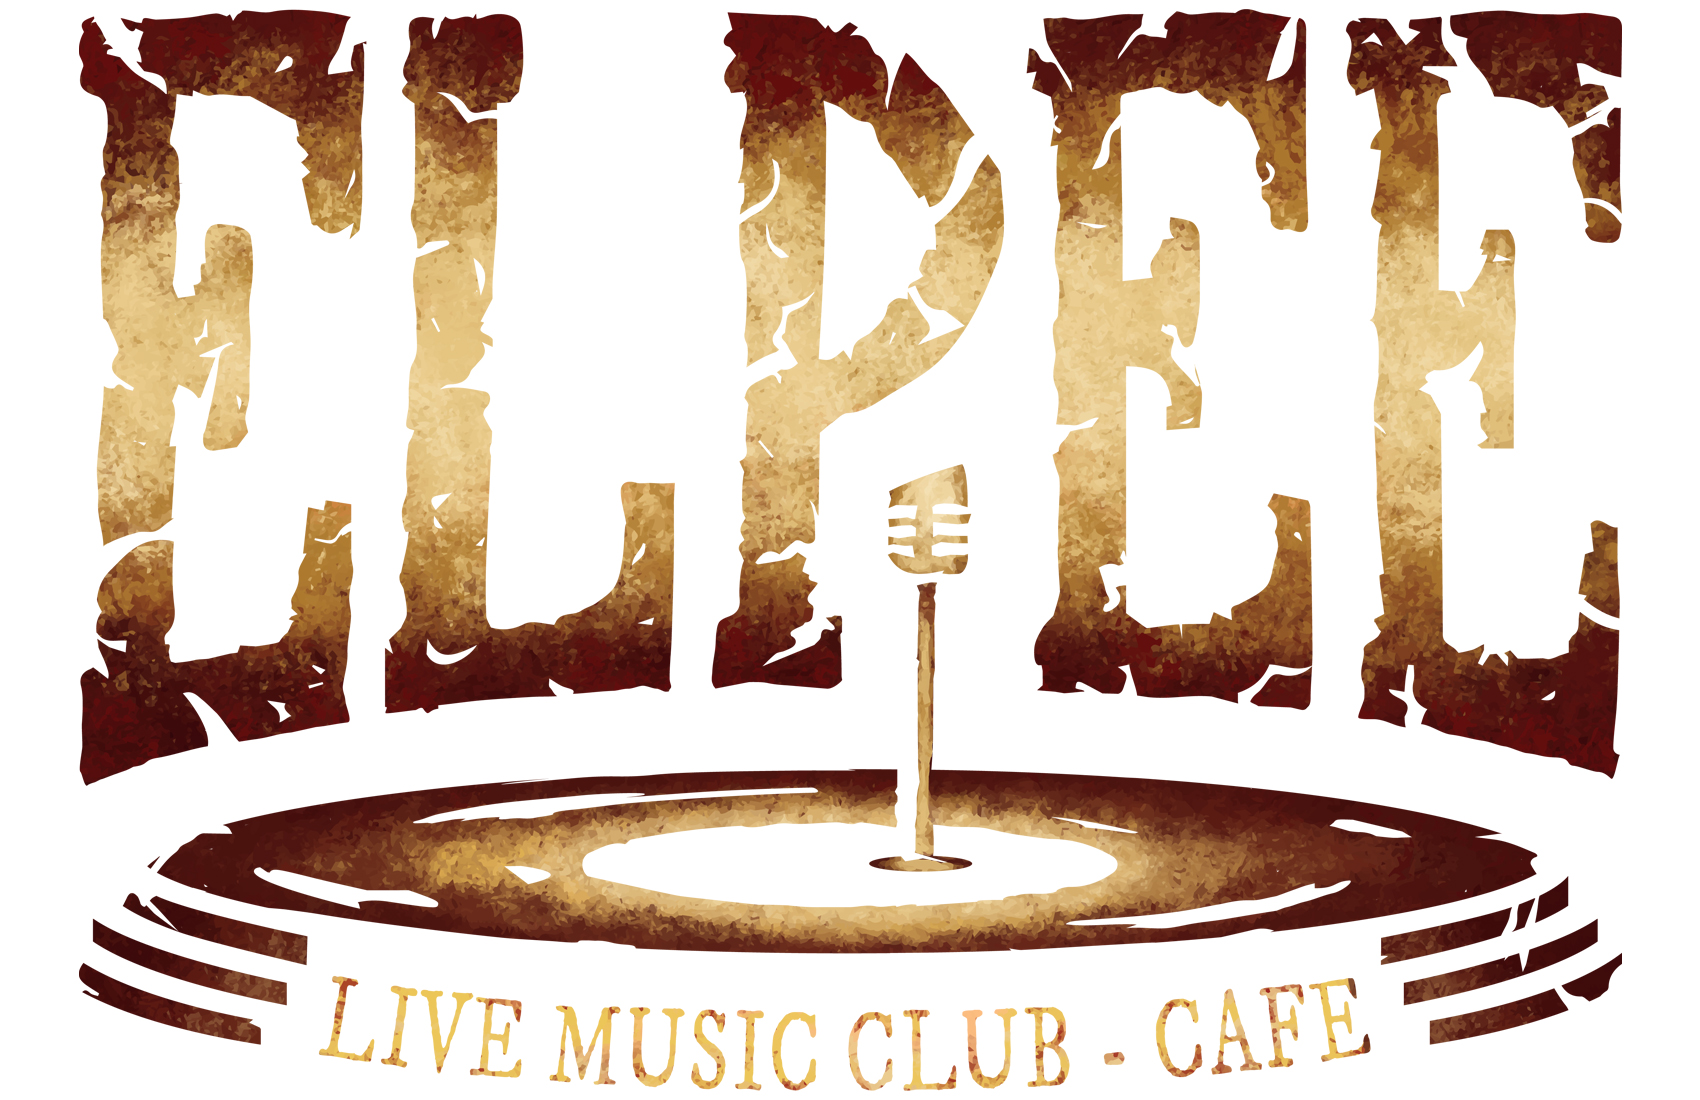 Elpee Music club